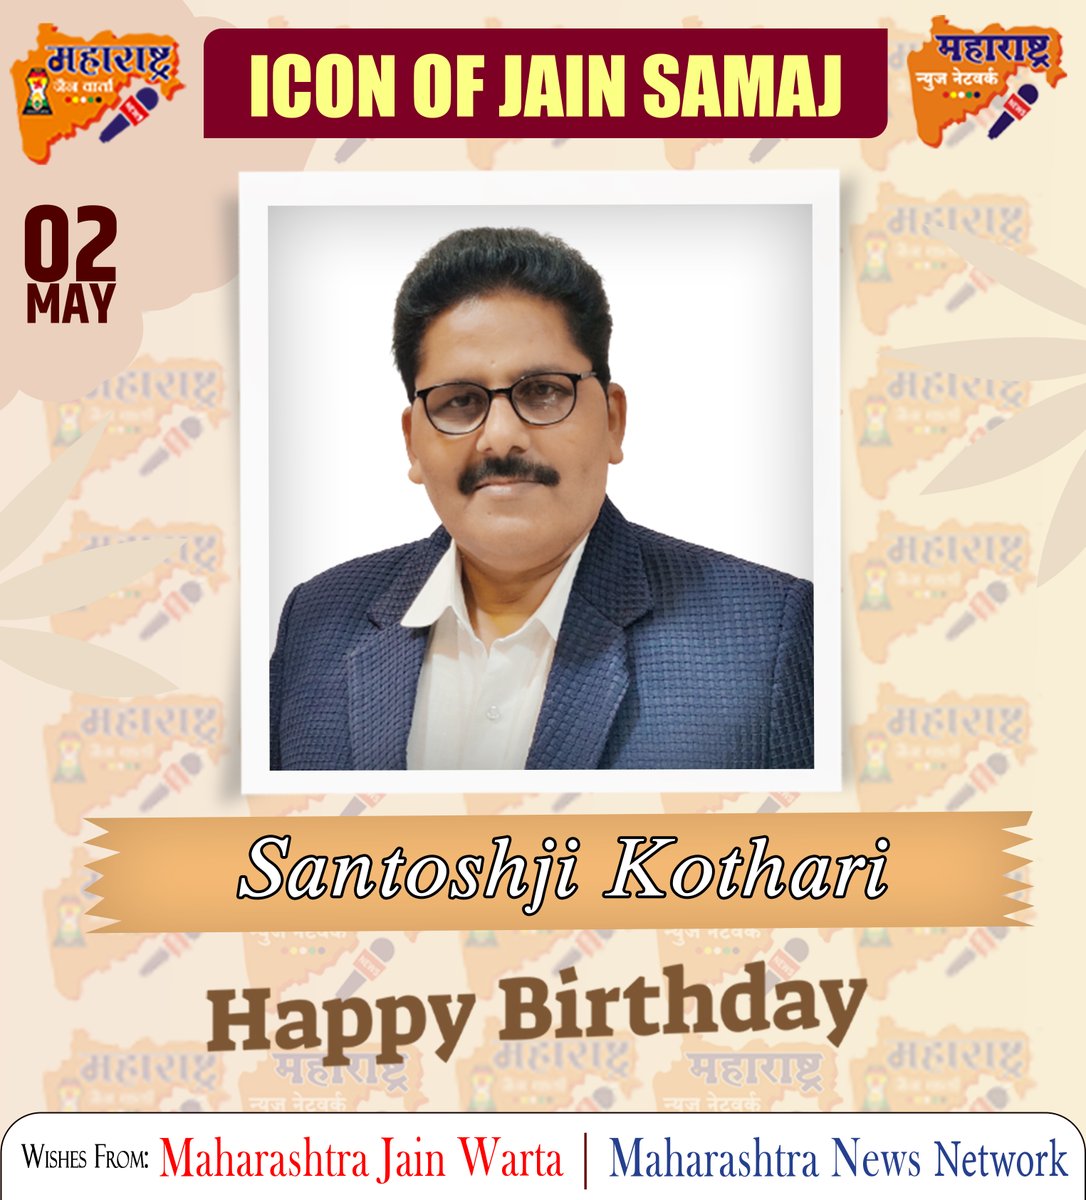 Happy Birthday Icon Of Jain Samaj....
#maharashtrajainwarta #jainsamajpune #Jainsamaj #birthday #birthdaywishes #mjw